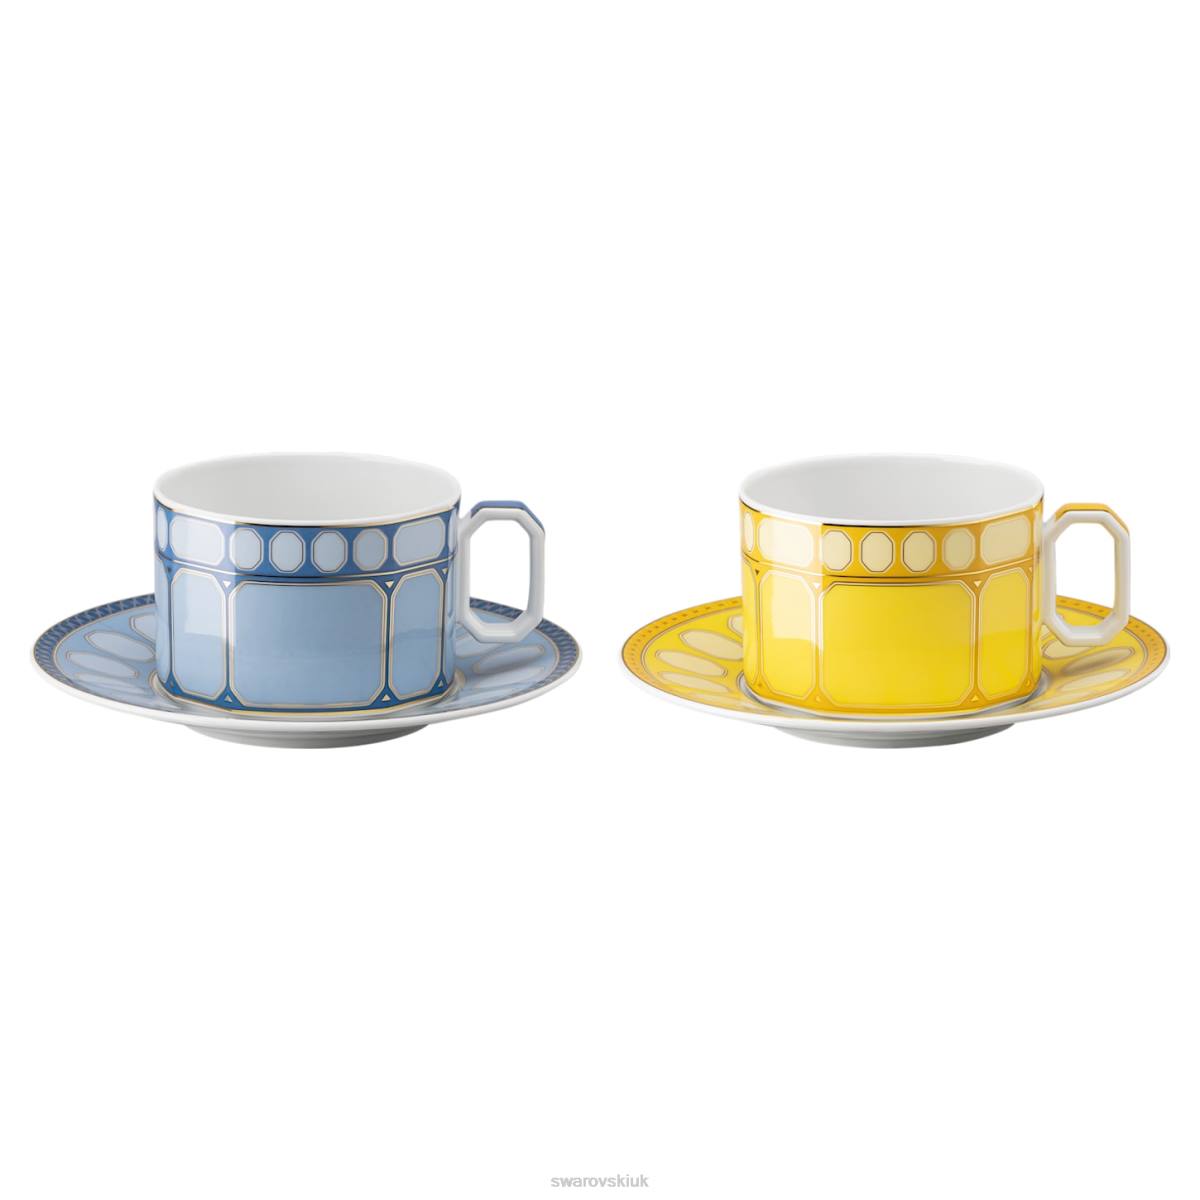 Decorations Swarovski Signum teacup set Porcelain, Multicolored 48JX1746